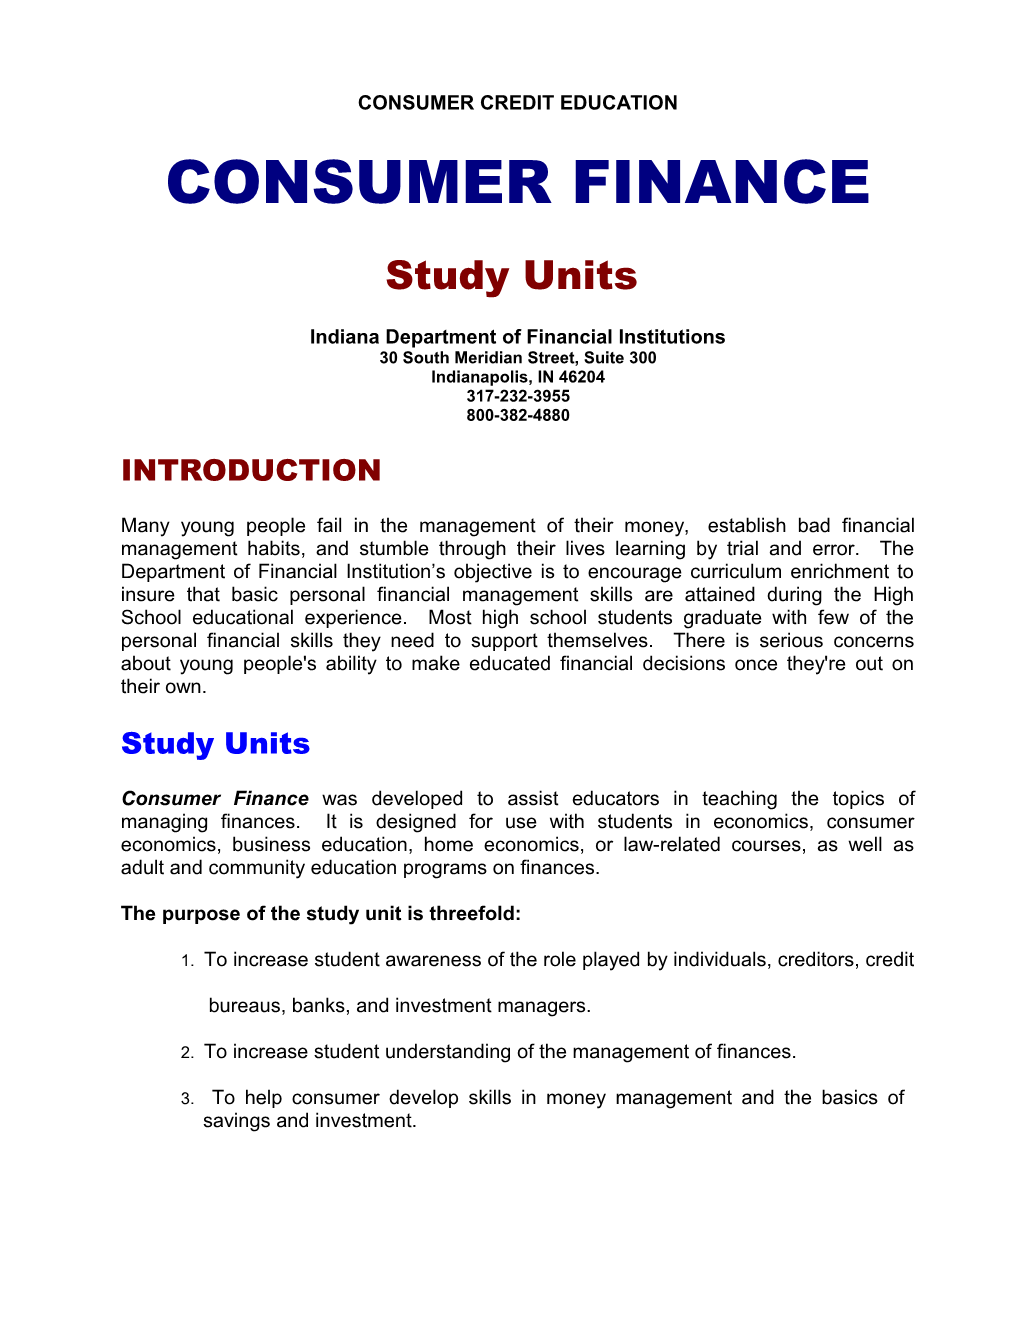 Consumer Credit Education